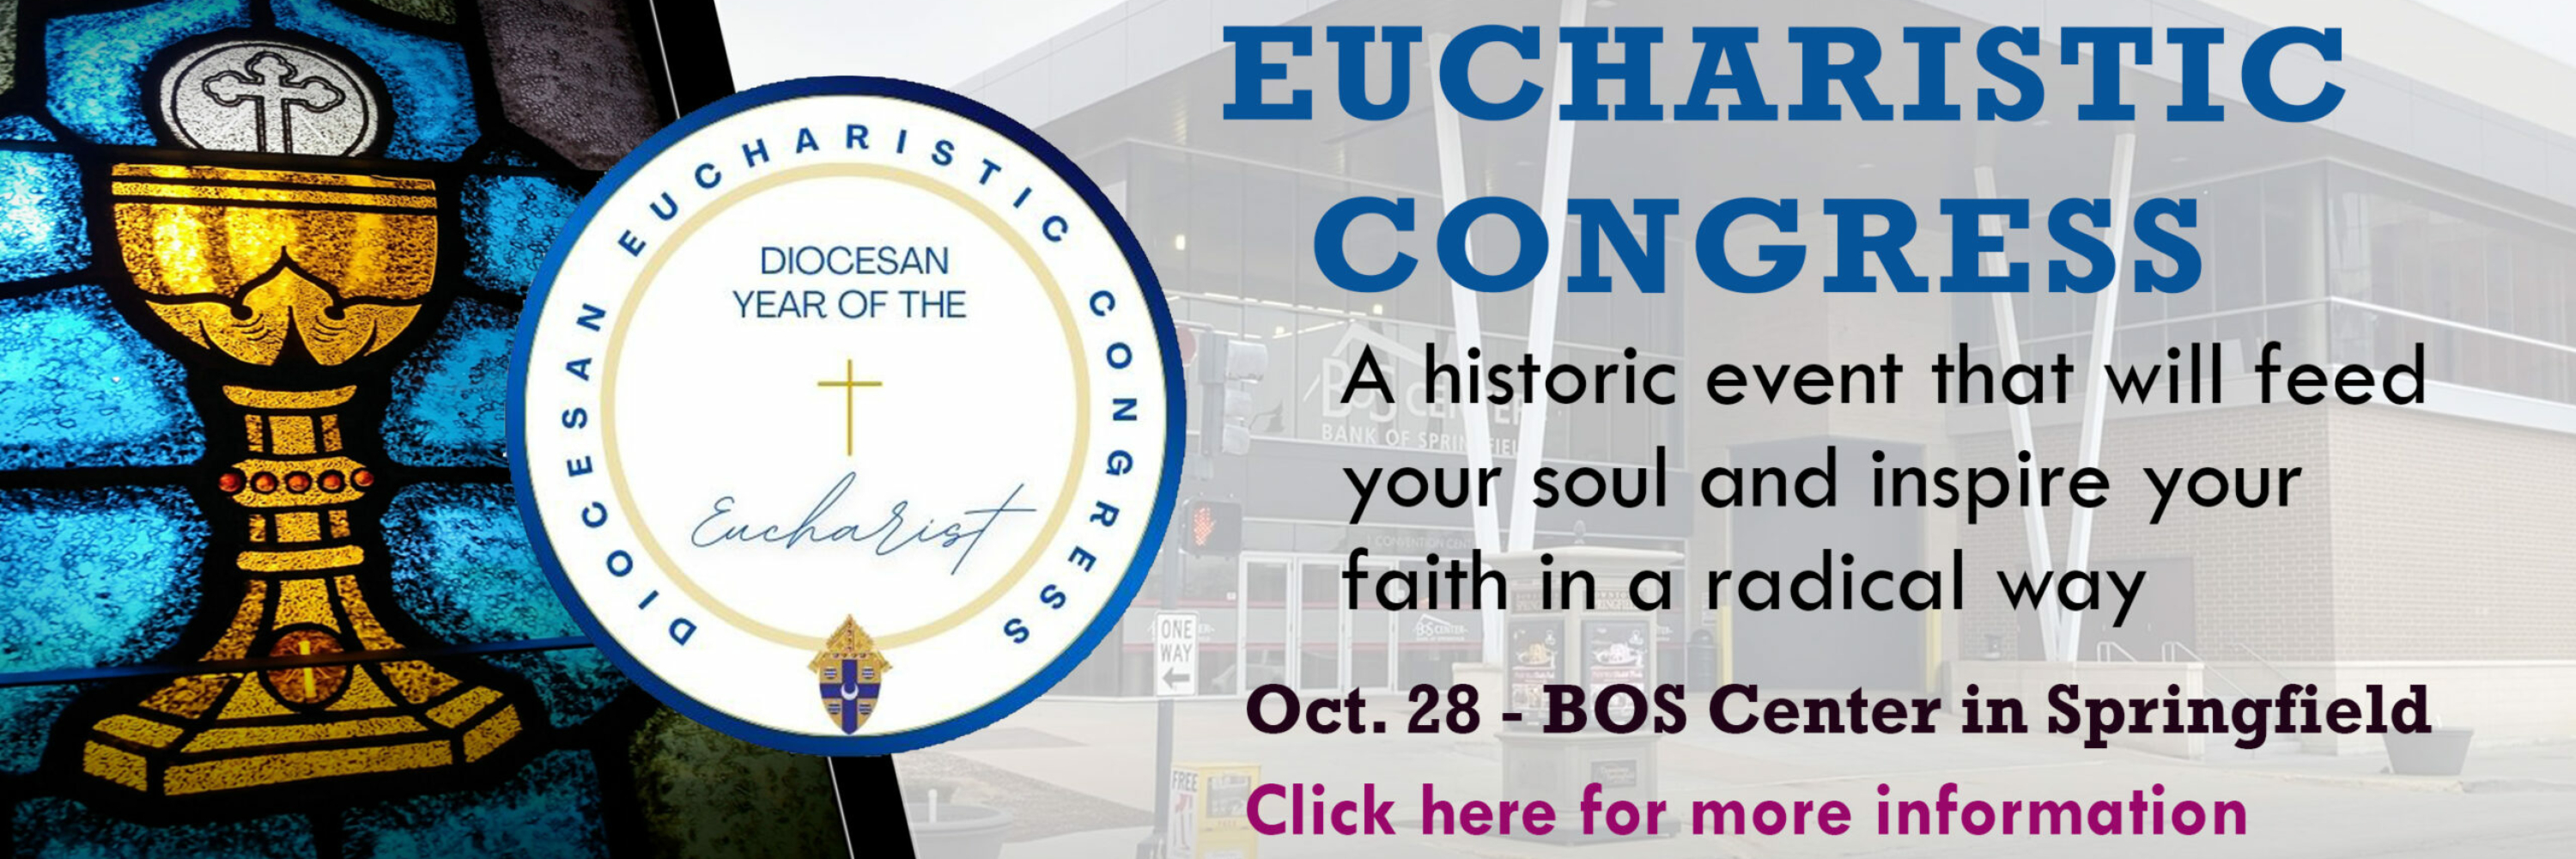 Eucharistic-Congress-web-banner